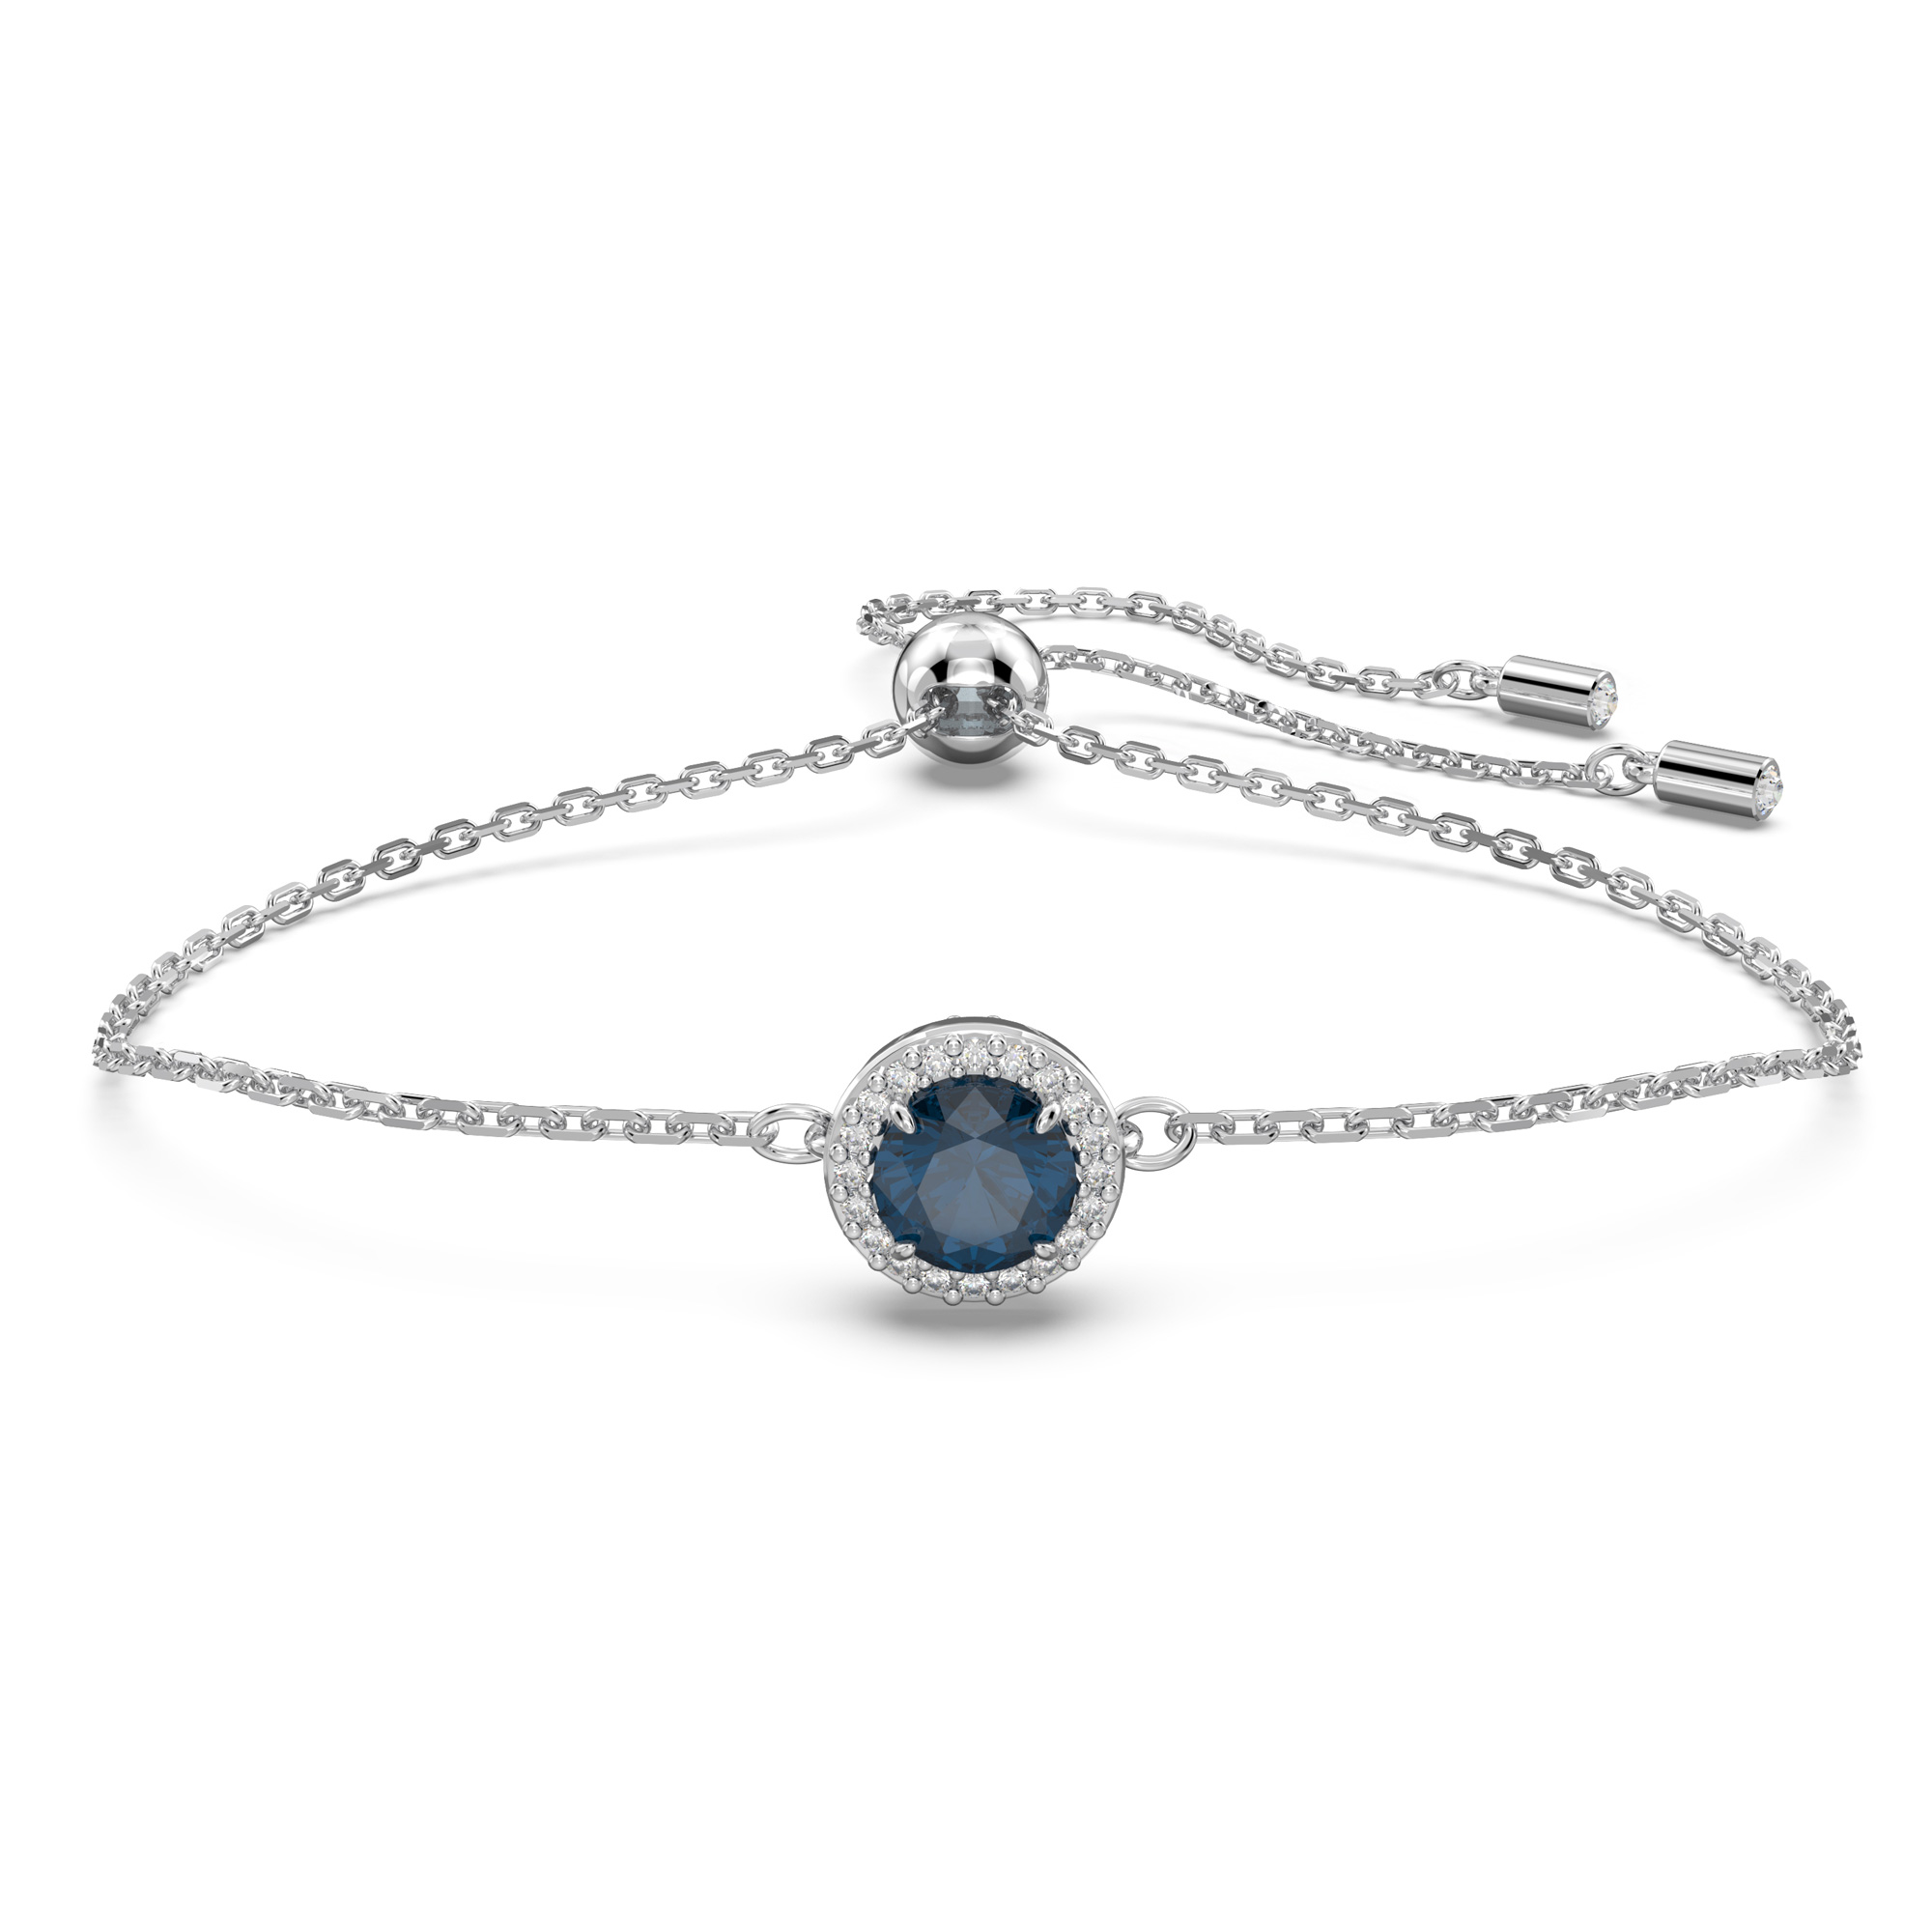 Swarovski Crystal and Zirconia Constella Blue Round Cut White Rhodium Plated Bolo Bracelet